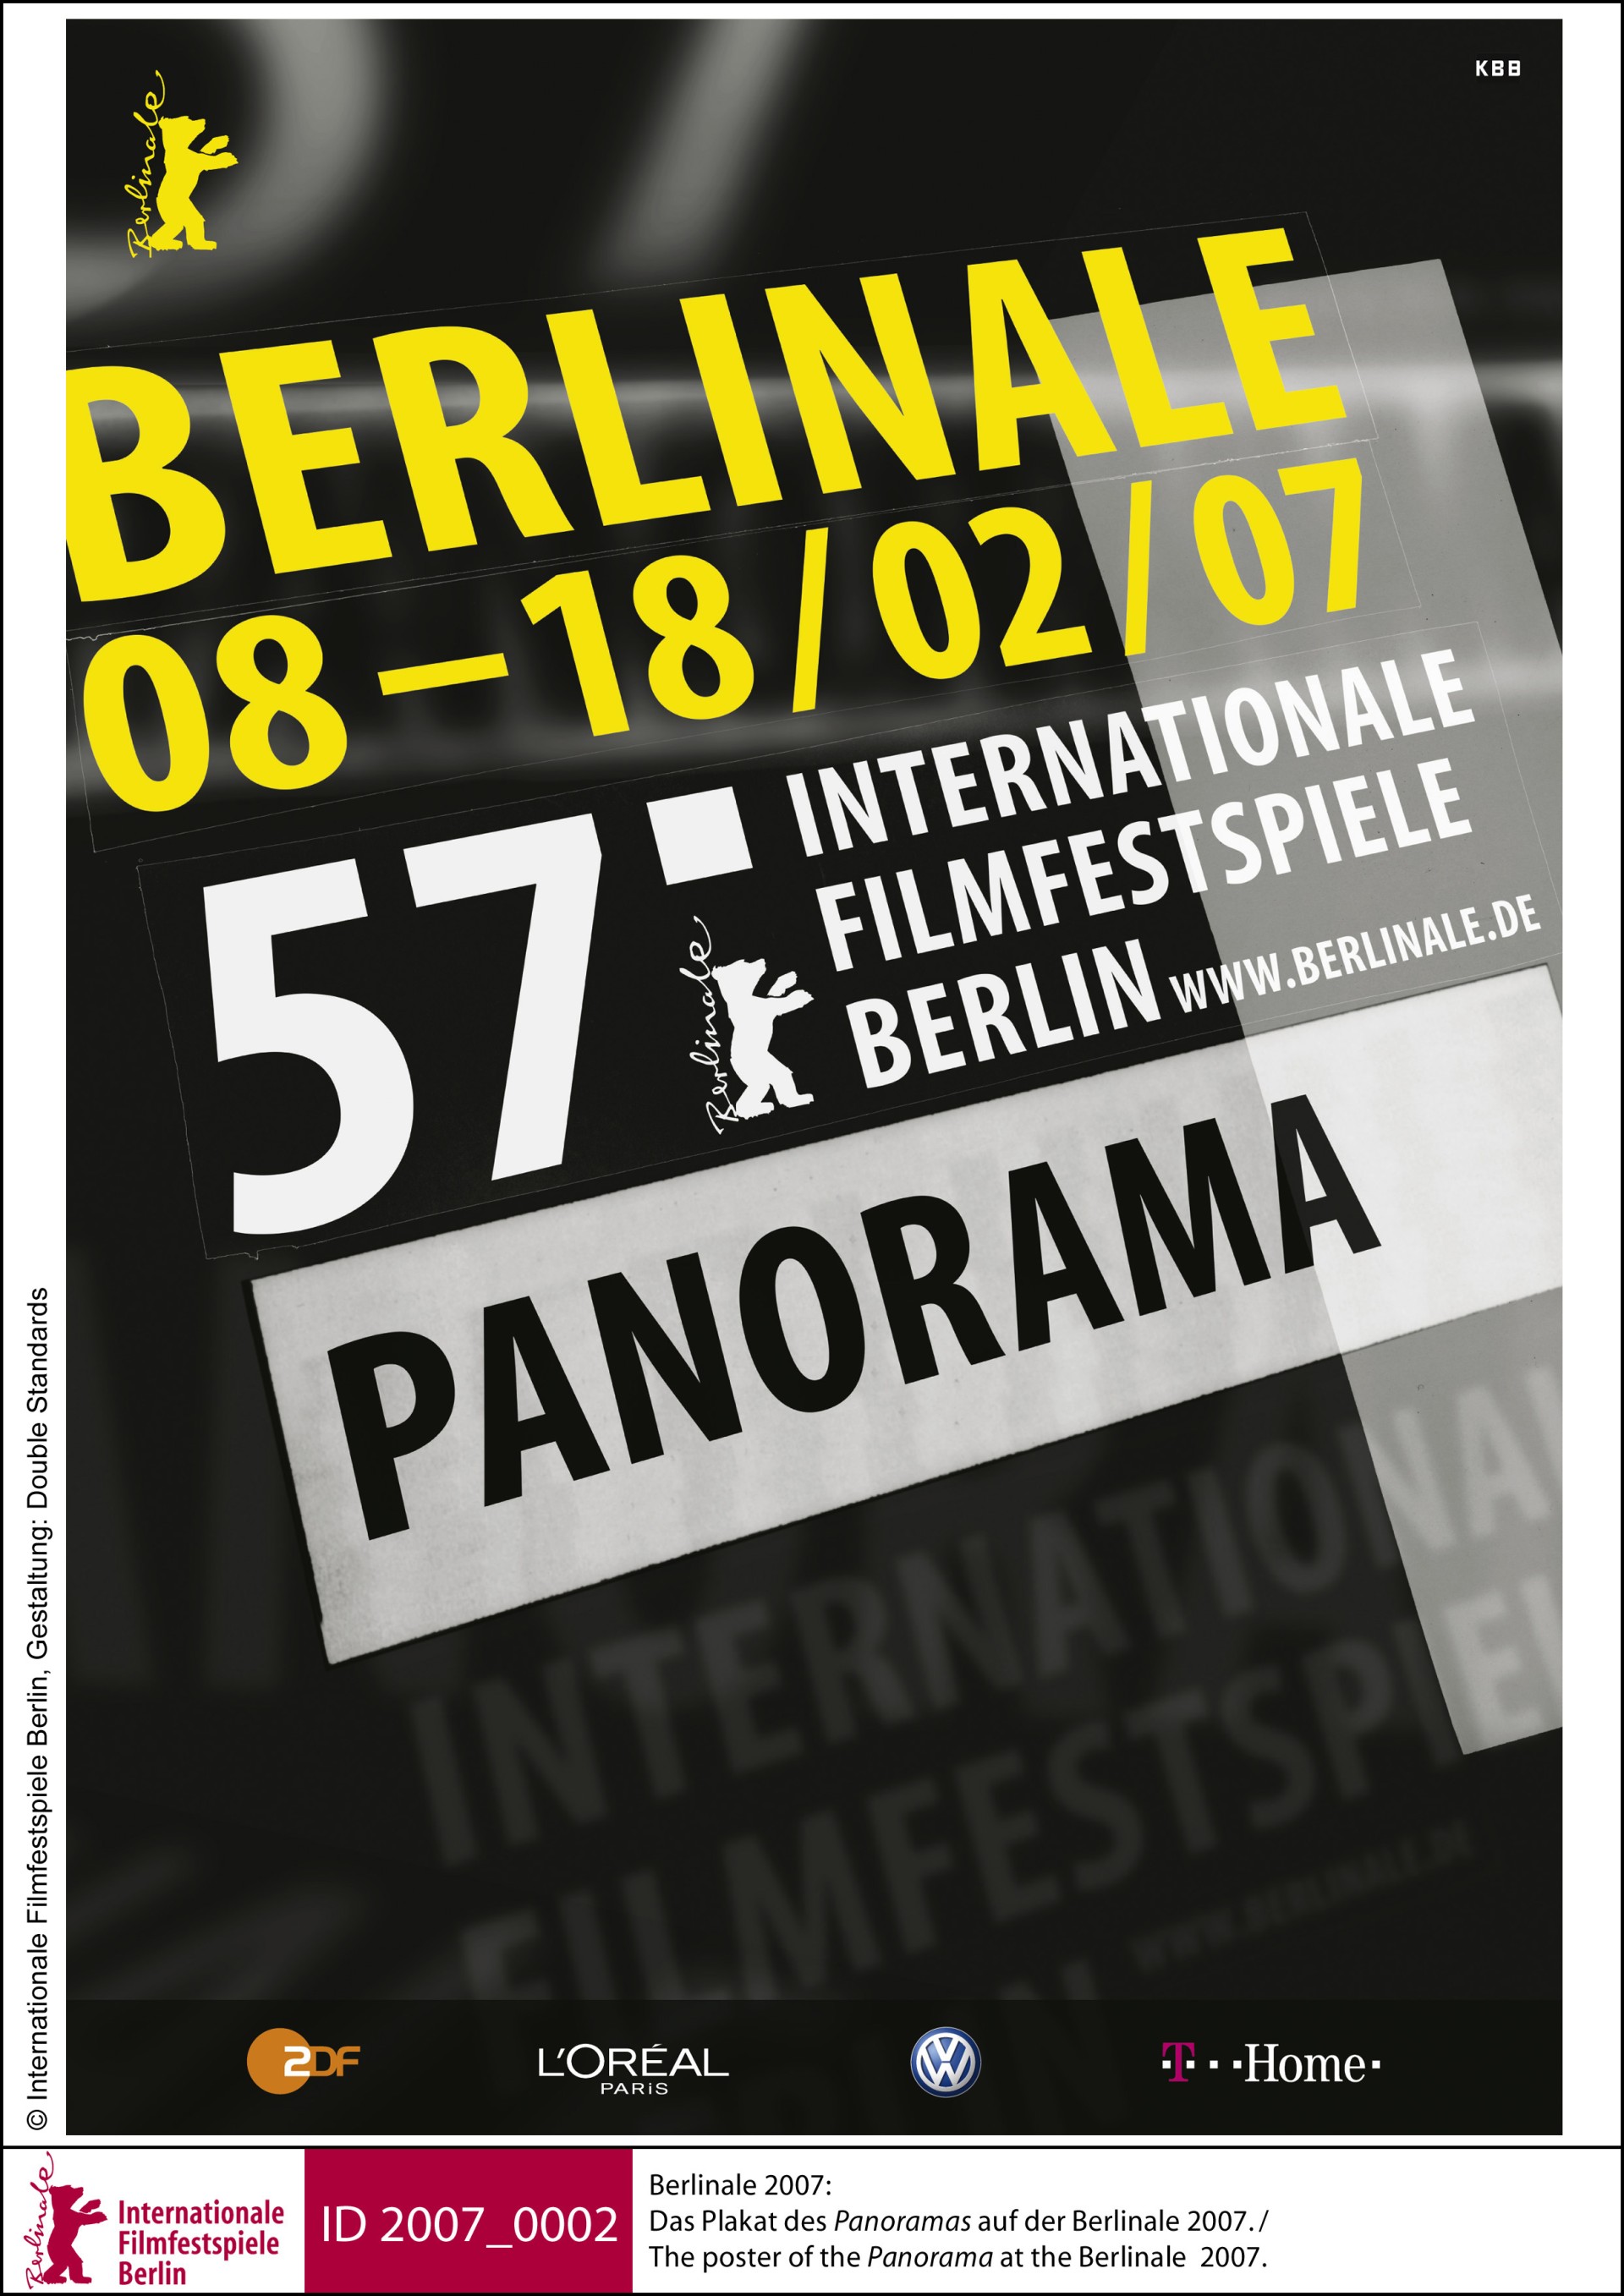 Berlinale, Archive, Photos & Videos